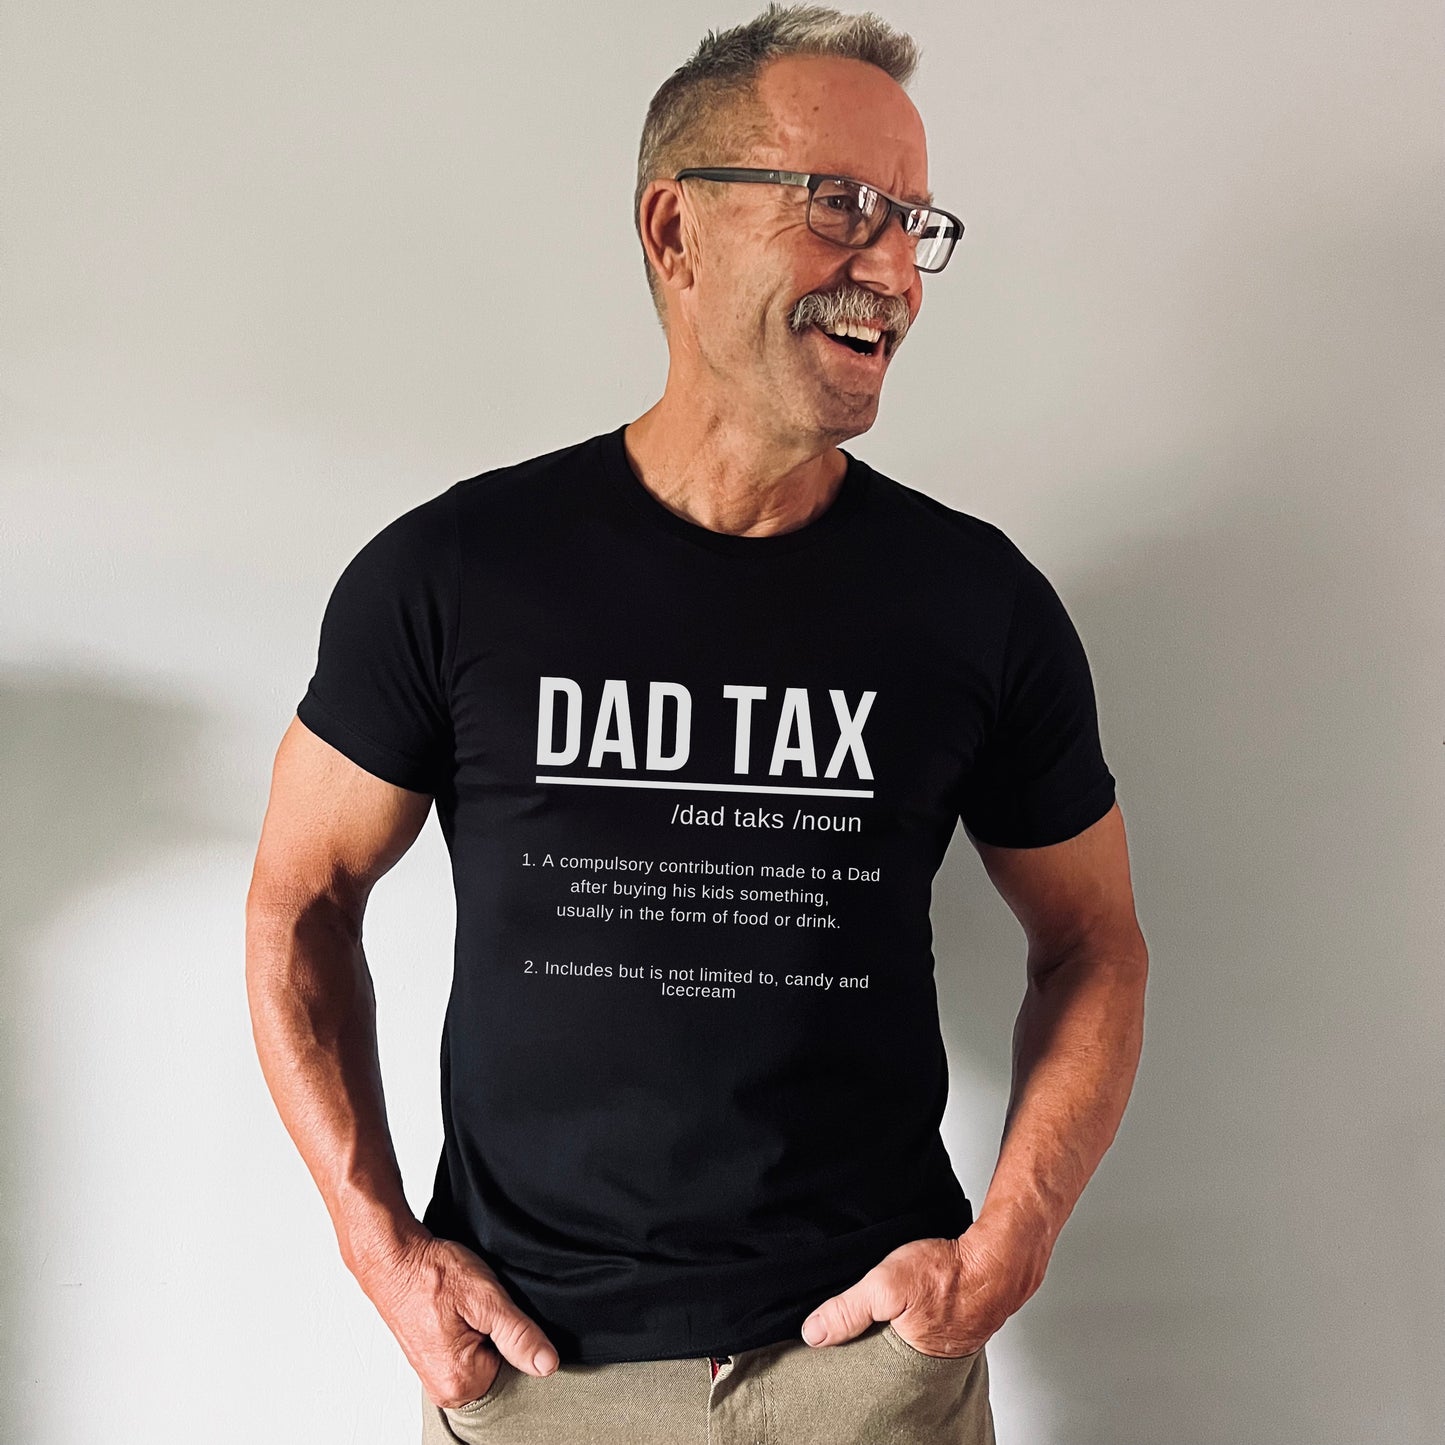 Dad Tax Funny T-shirt